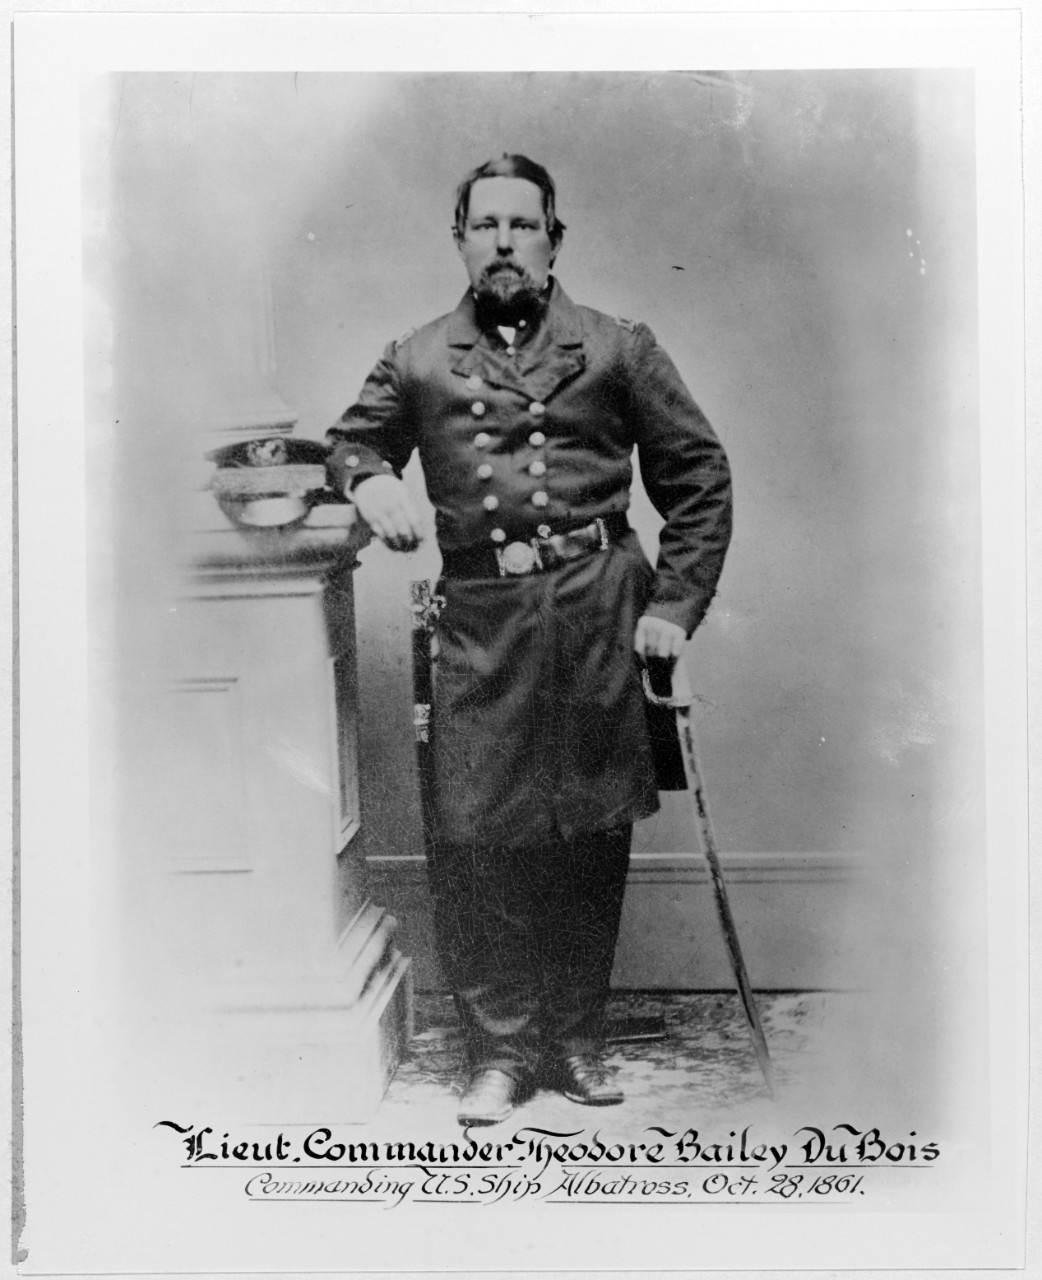 Lieutenant Commander Theodore Bailey Du Bois, USN